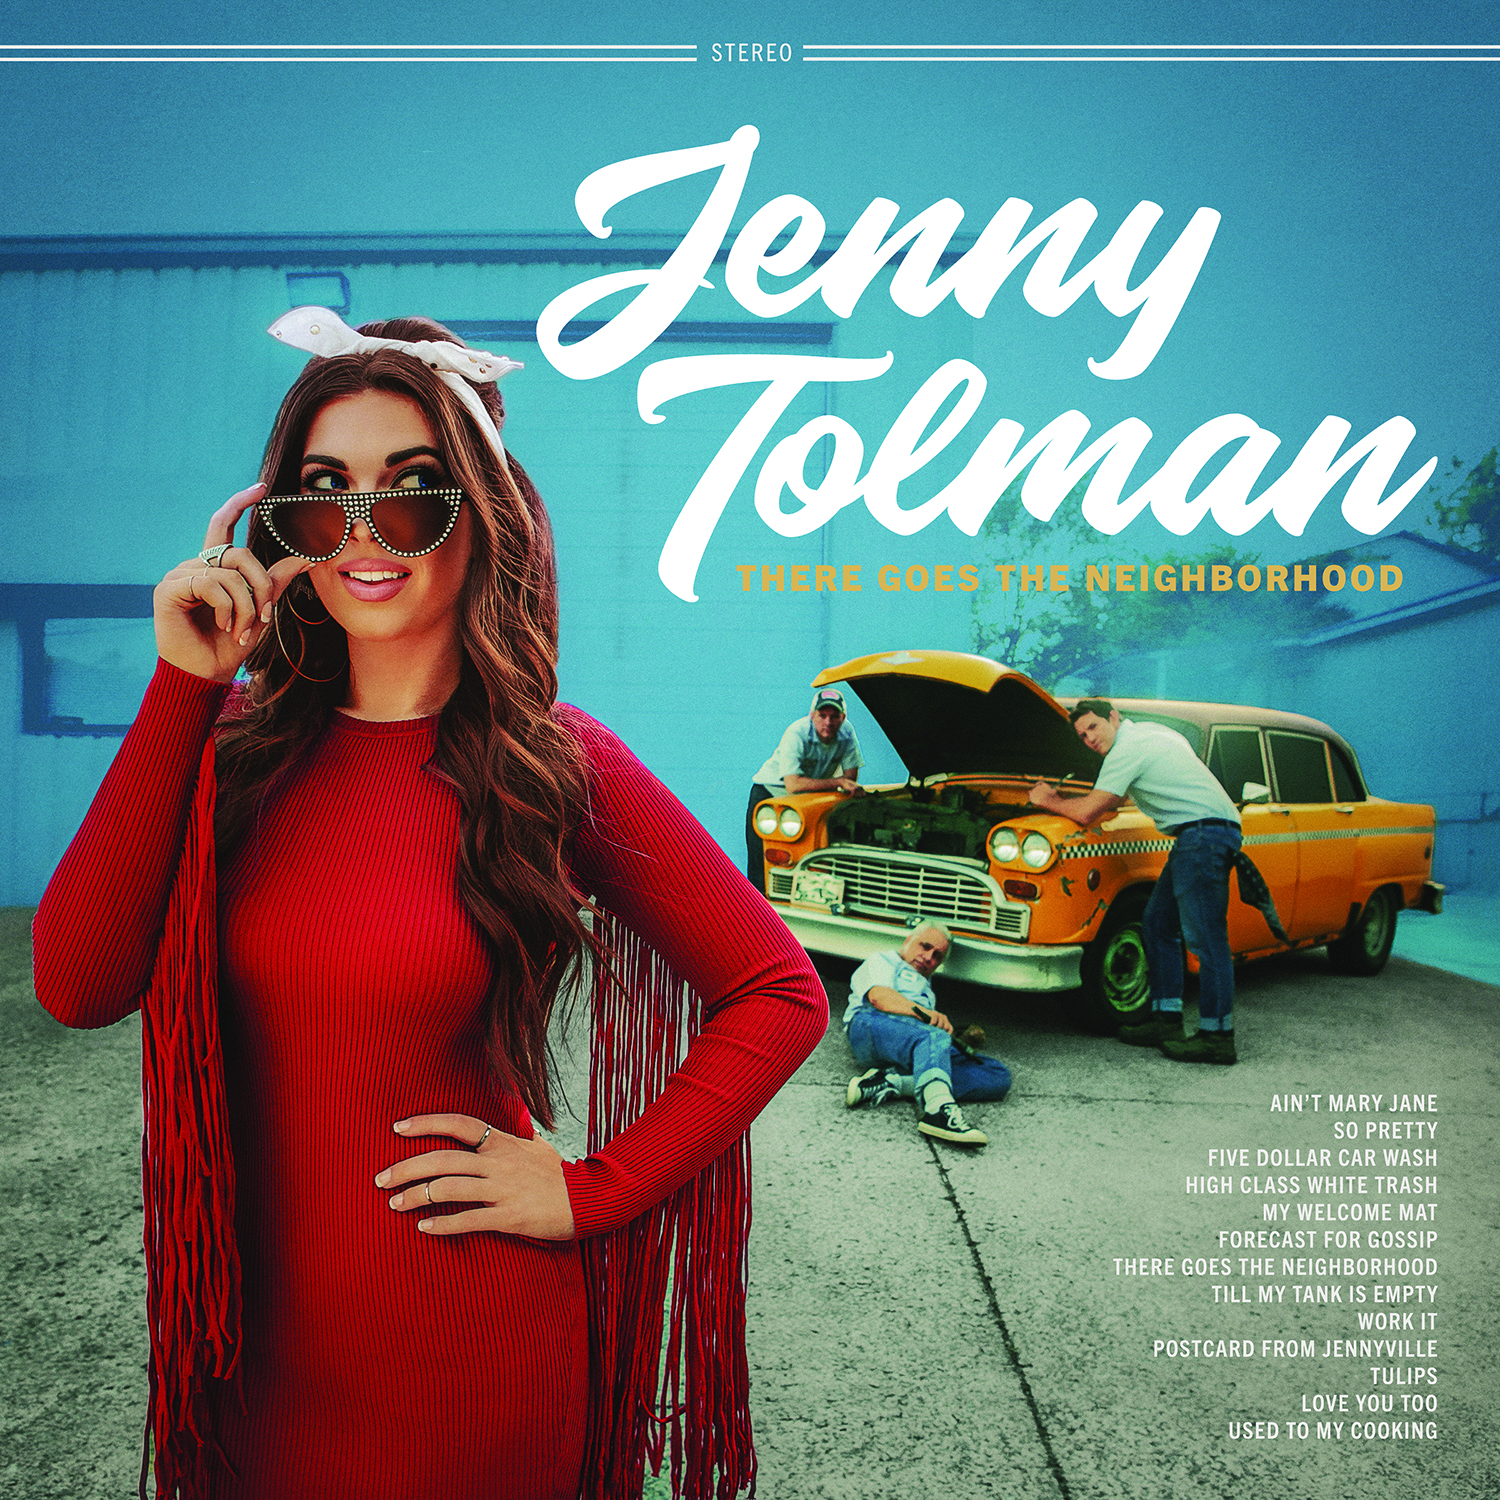 Jenny Tolman "There Goes the Neighborhood"